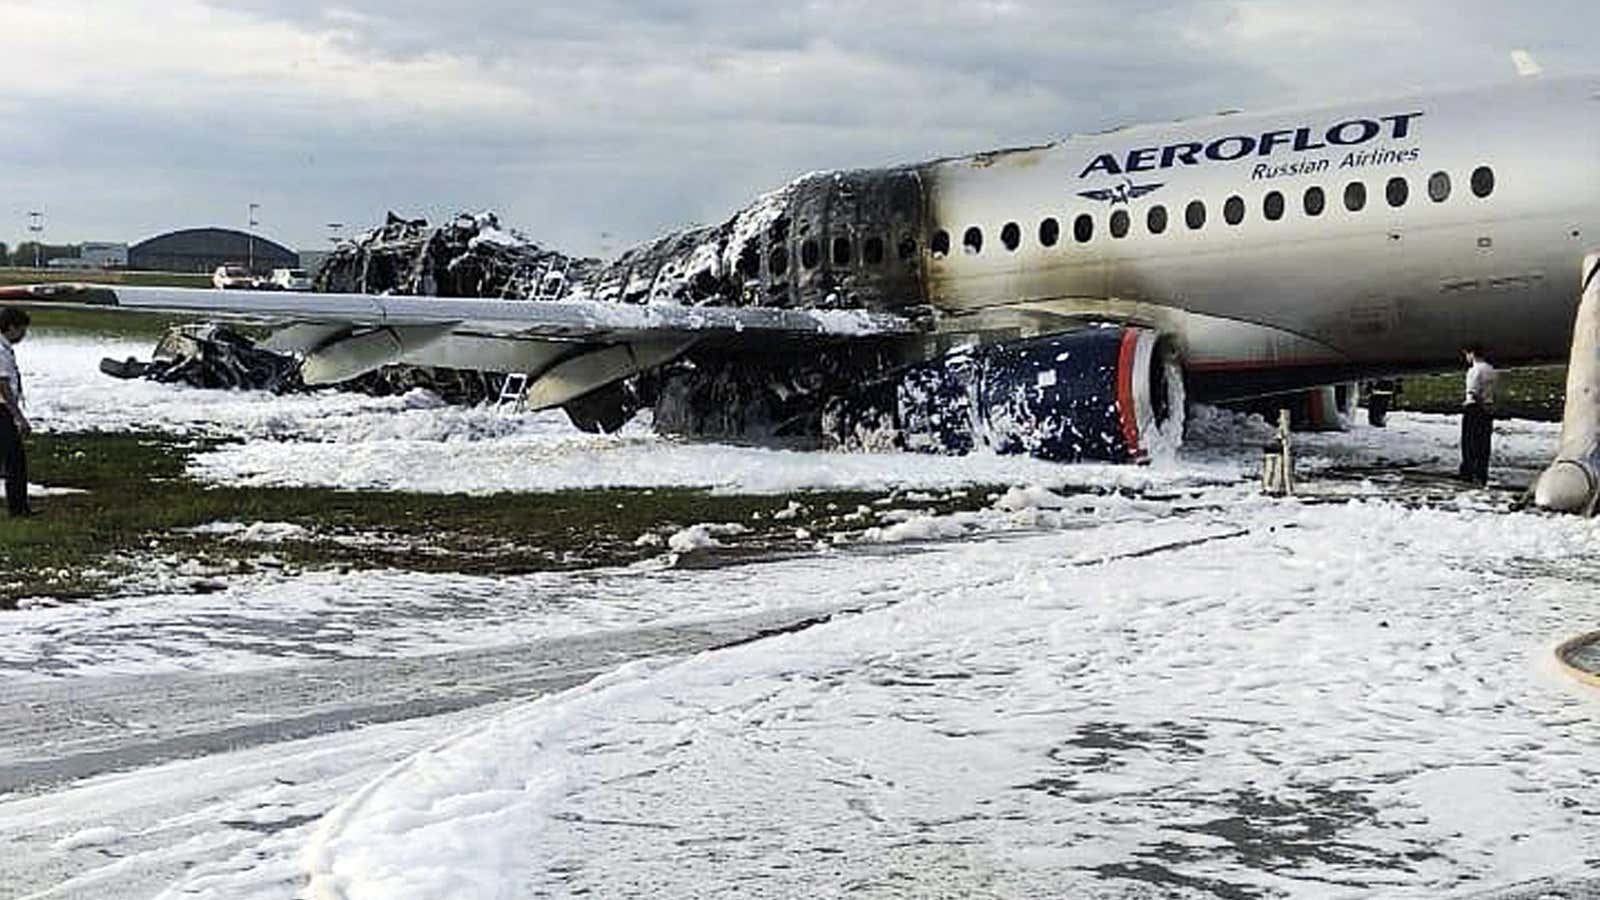 A wrecked Sukhoi Superjet 100 after its fiery crash landing.